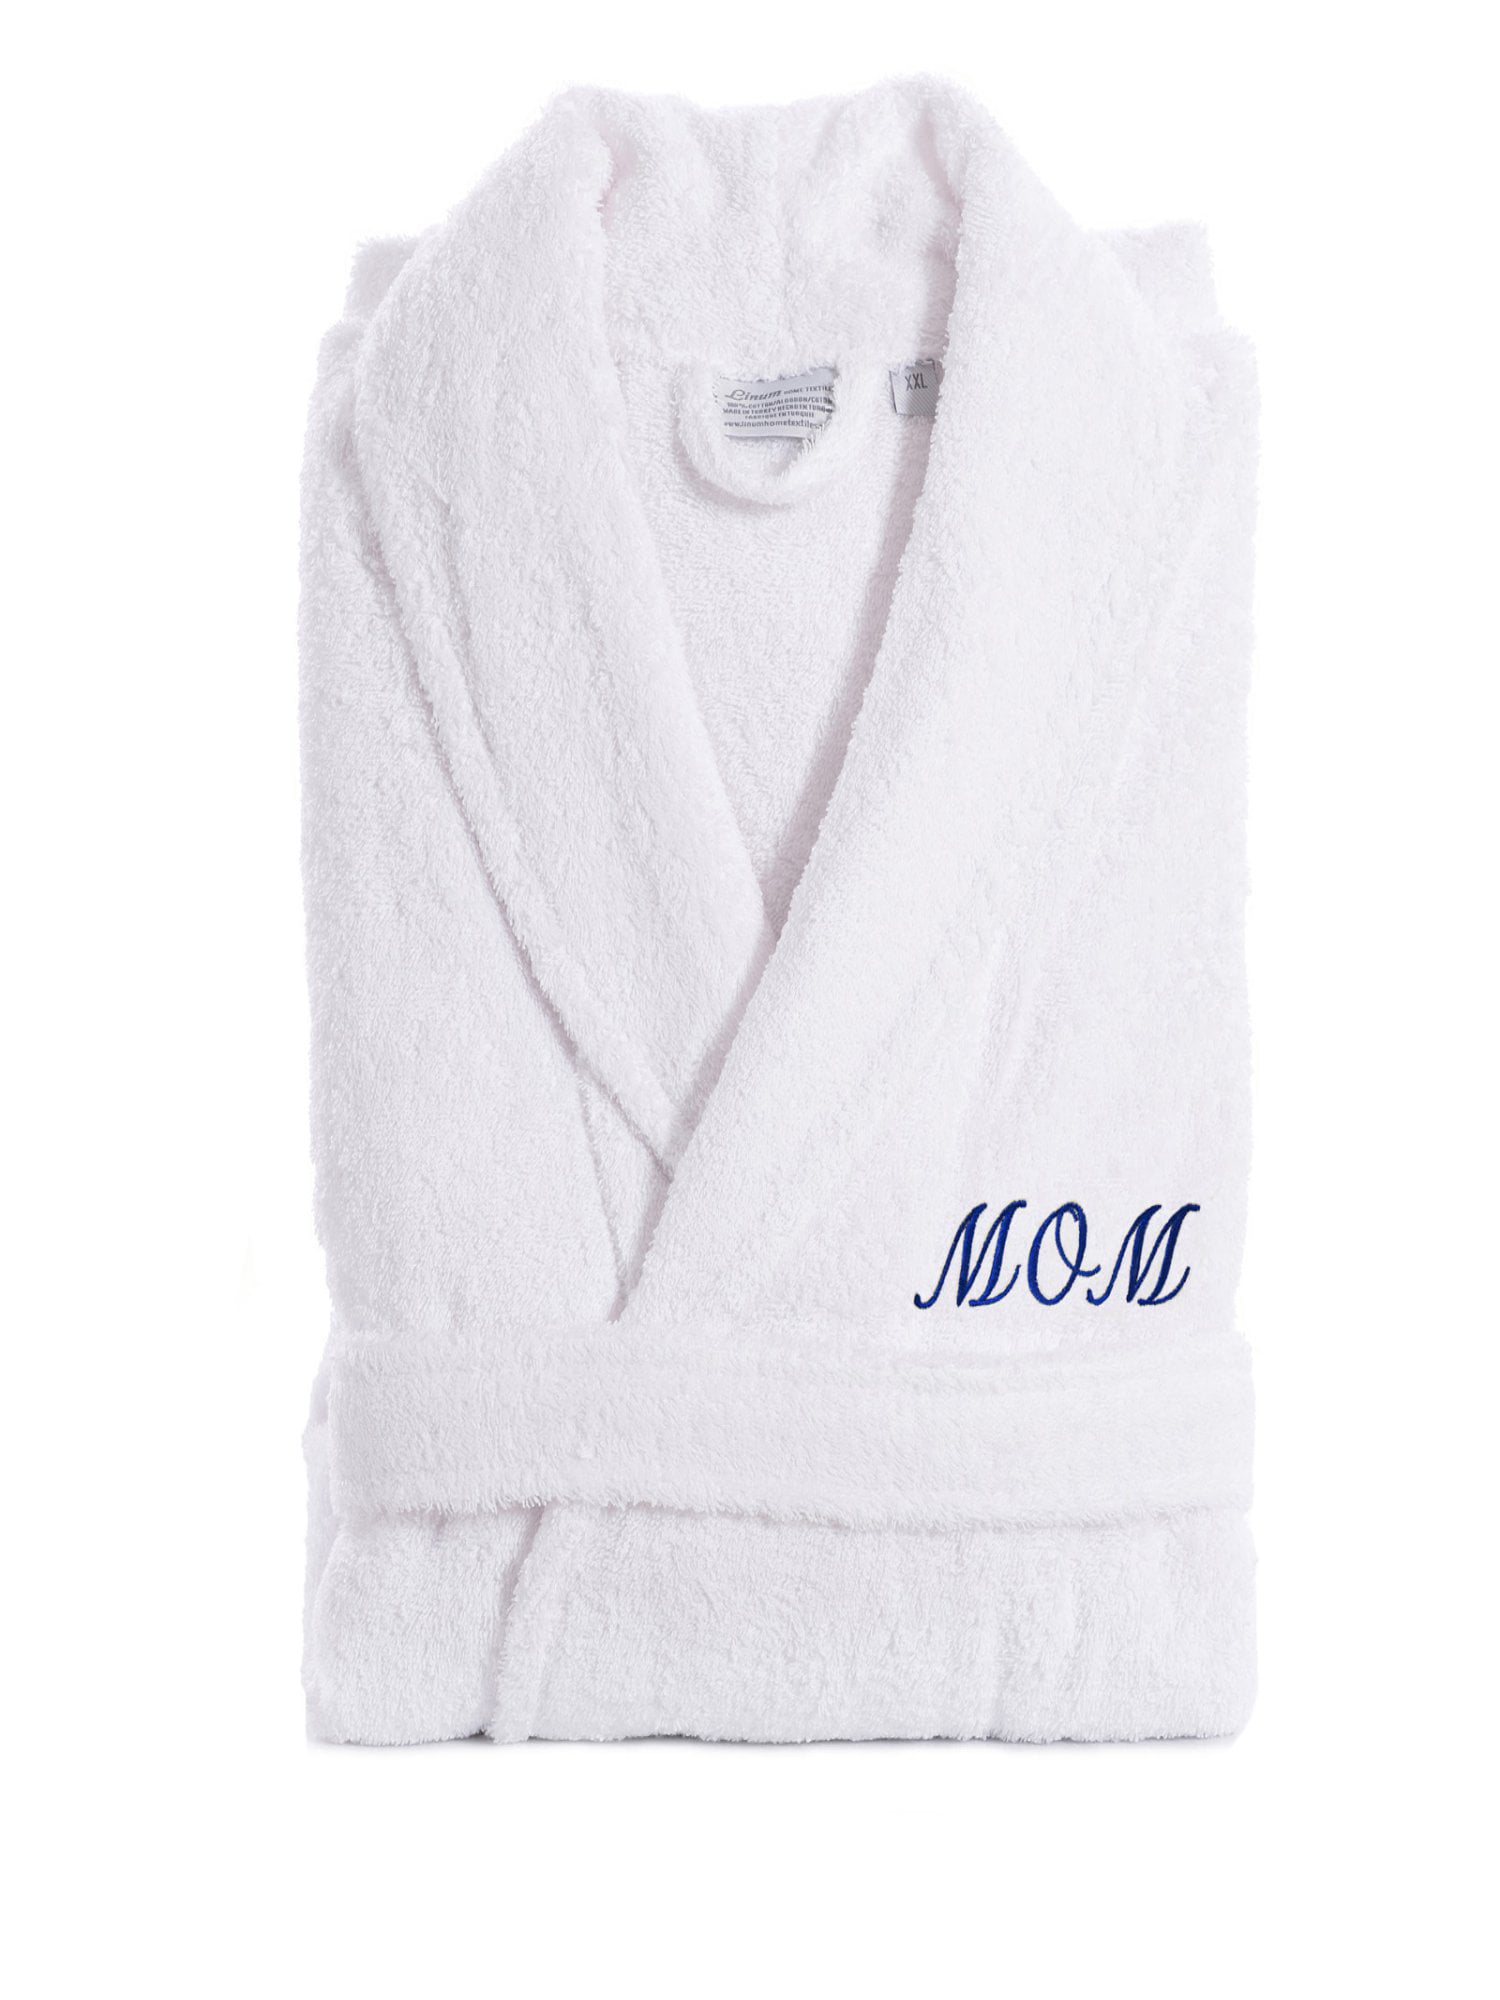 Soft Cotton Terry Cloth Bath Sheet  Shop Waldorf Astoria Hotels & Resorts